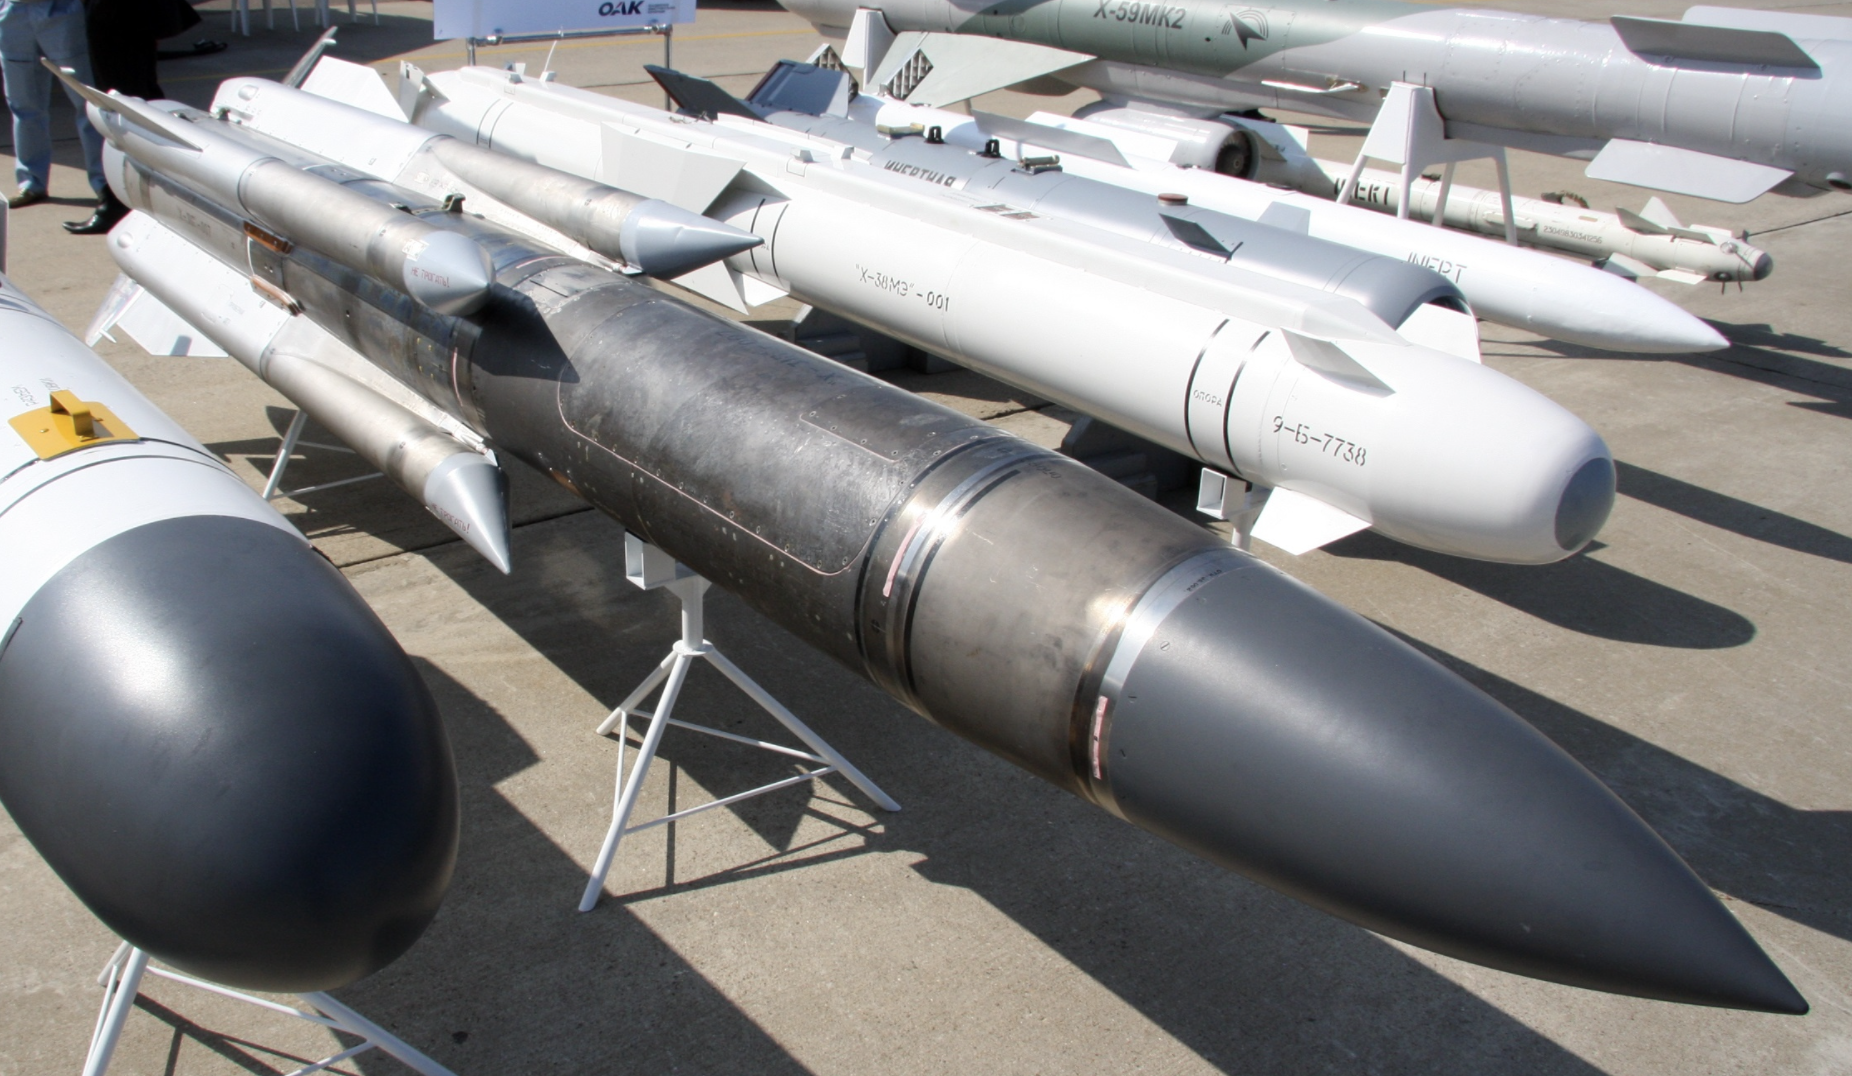 1 5 x 31. Х-31п ракета. Противорадиолокационная ракета х-31п. Х-31 ракета. Высокоскоростная противорадиолокационная ракета х-31п.